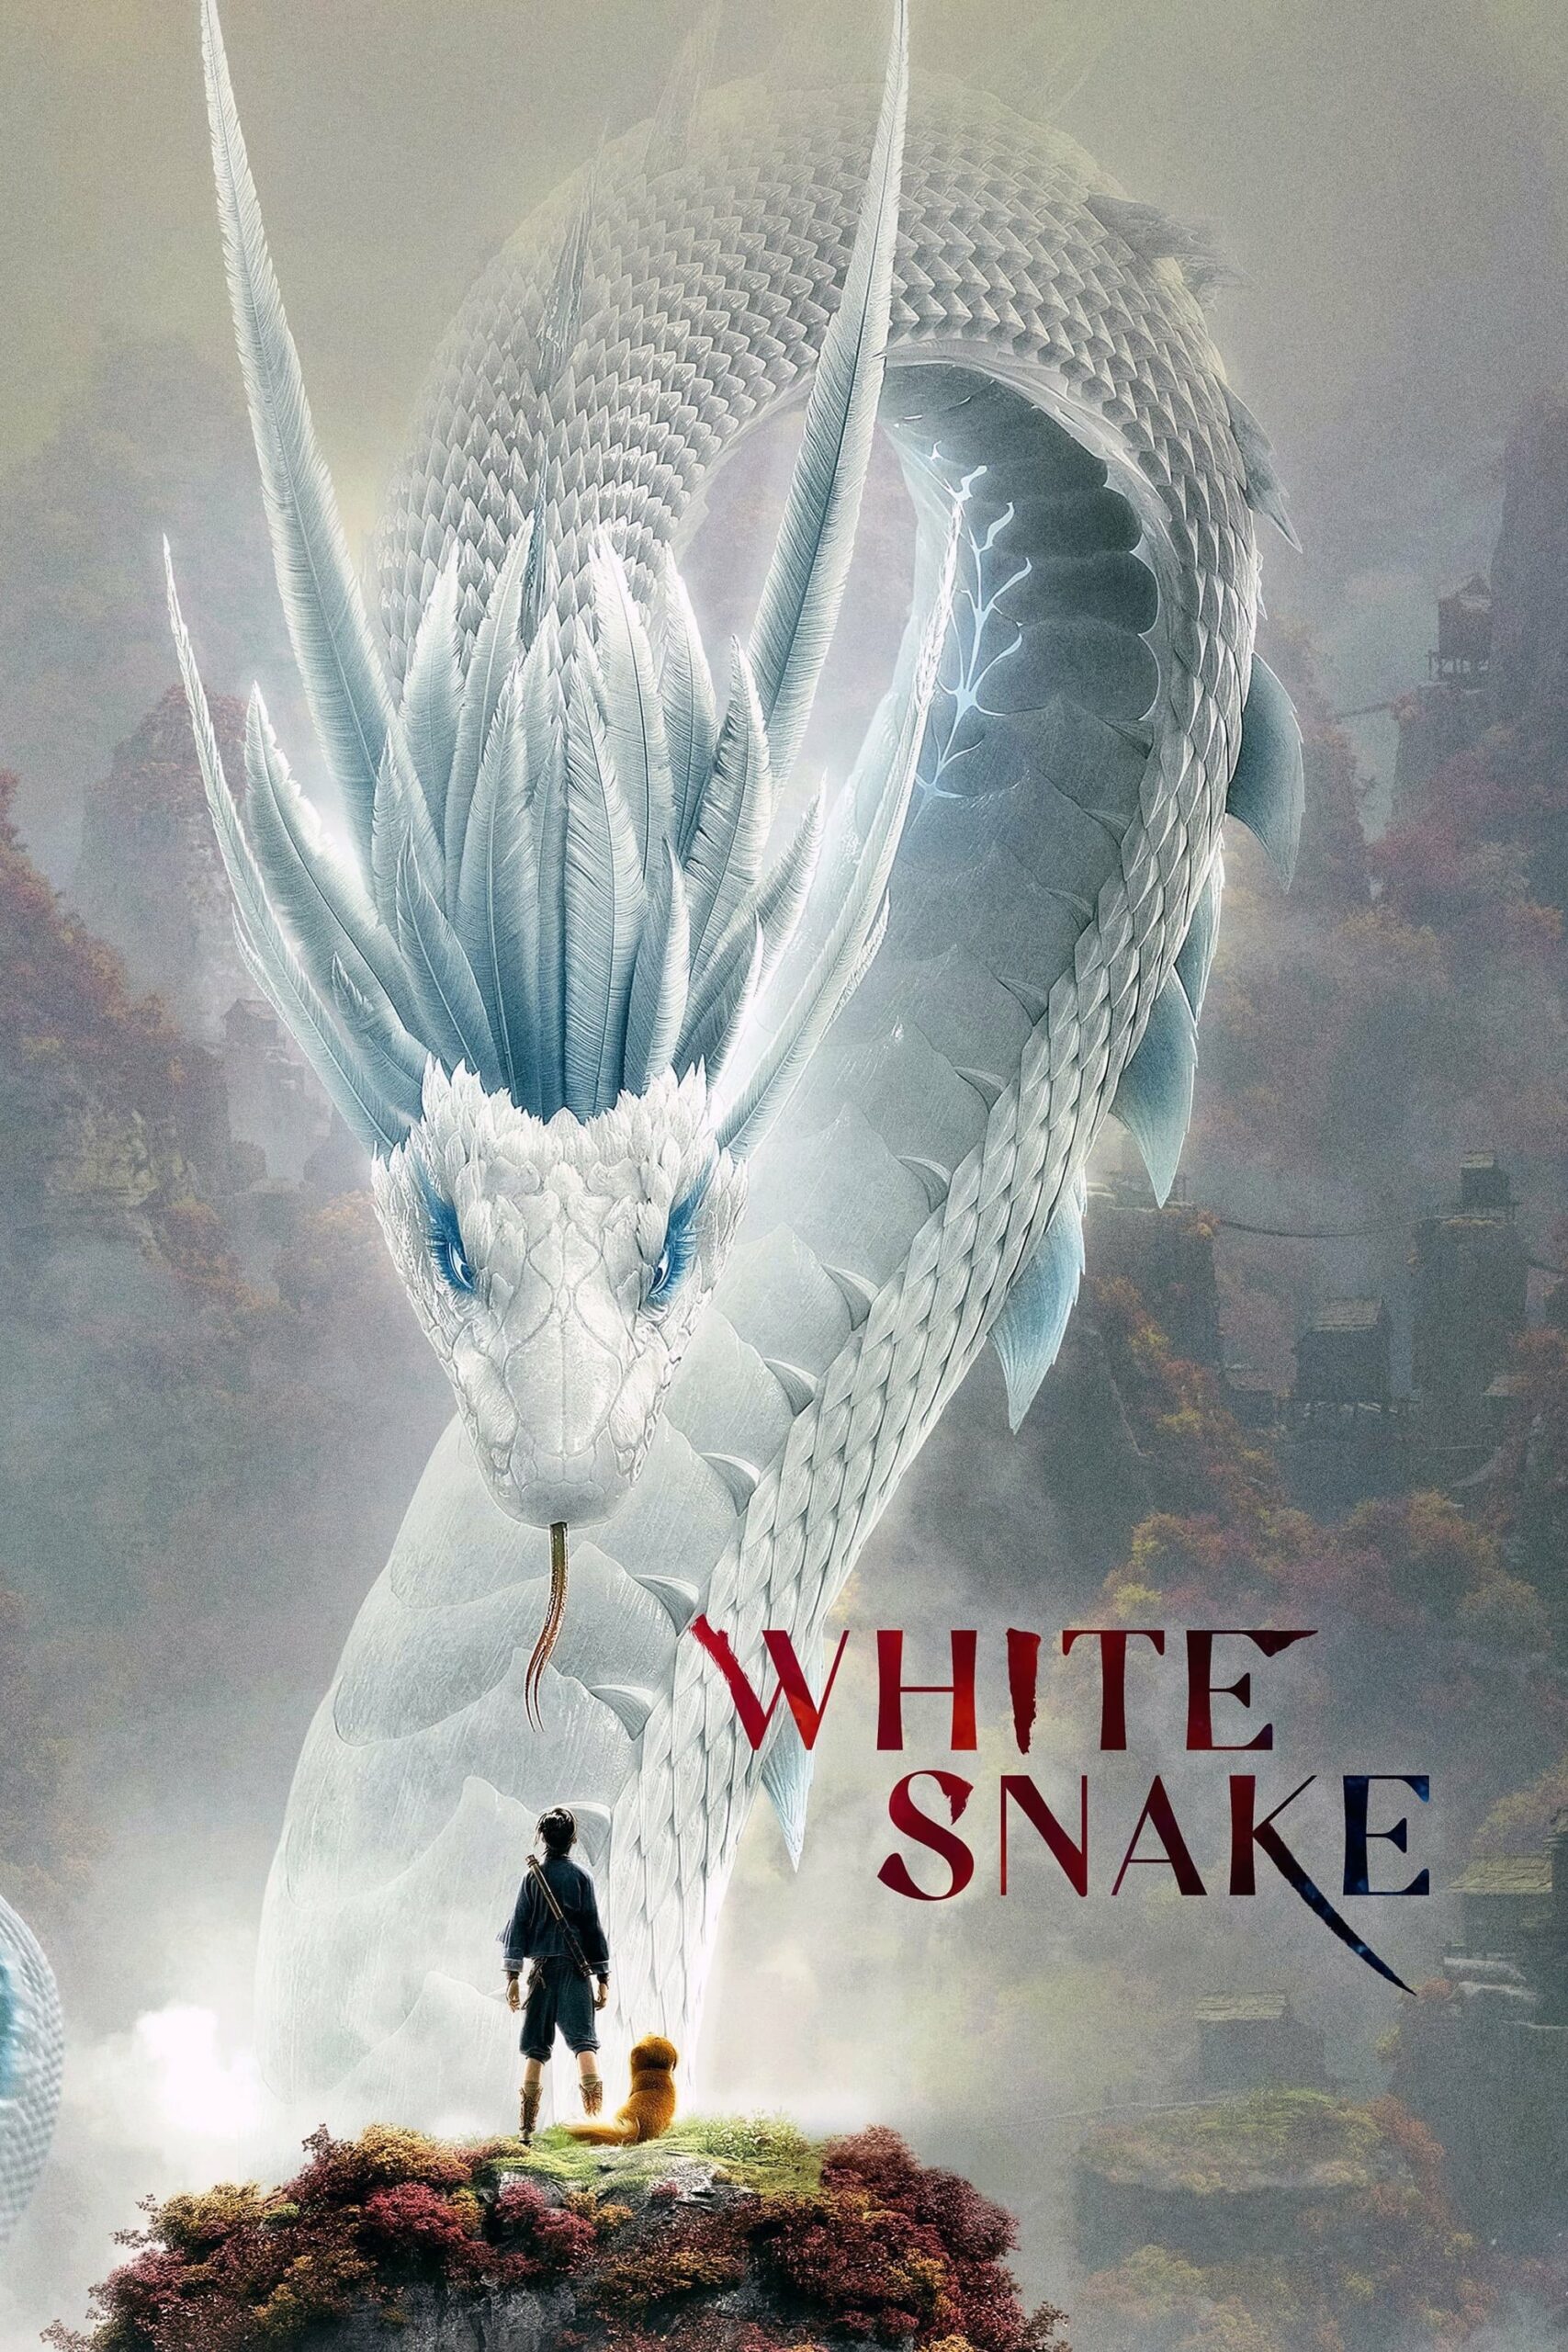 Poster for the movie "White Snake"